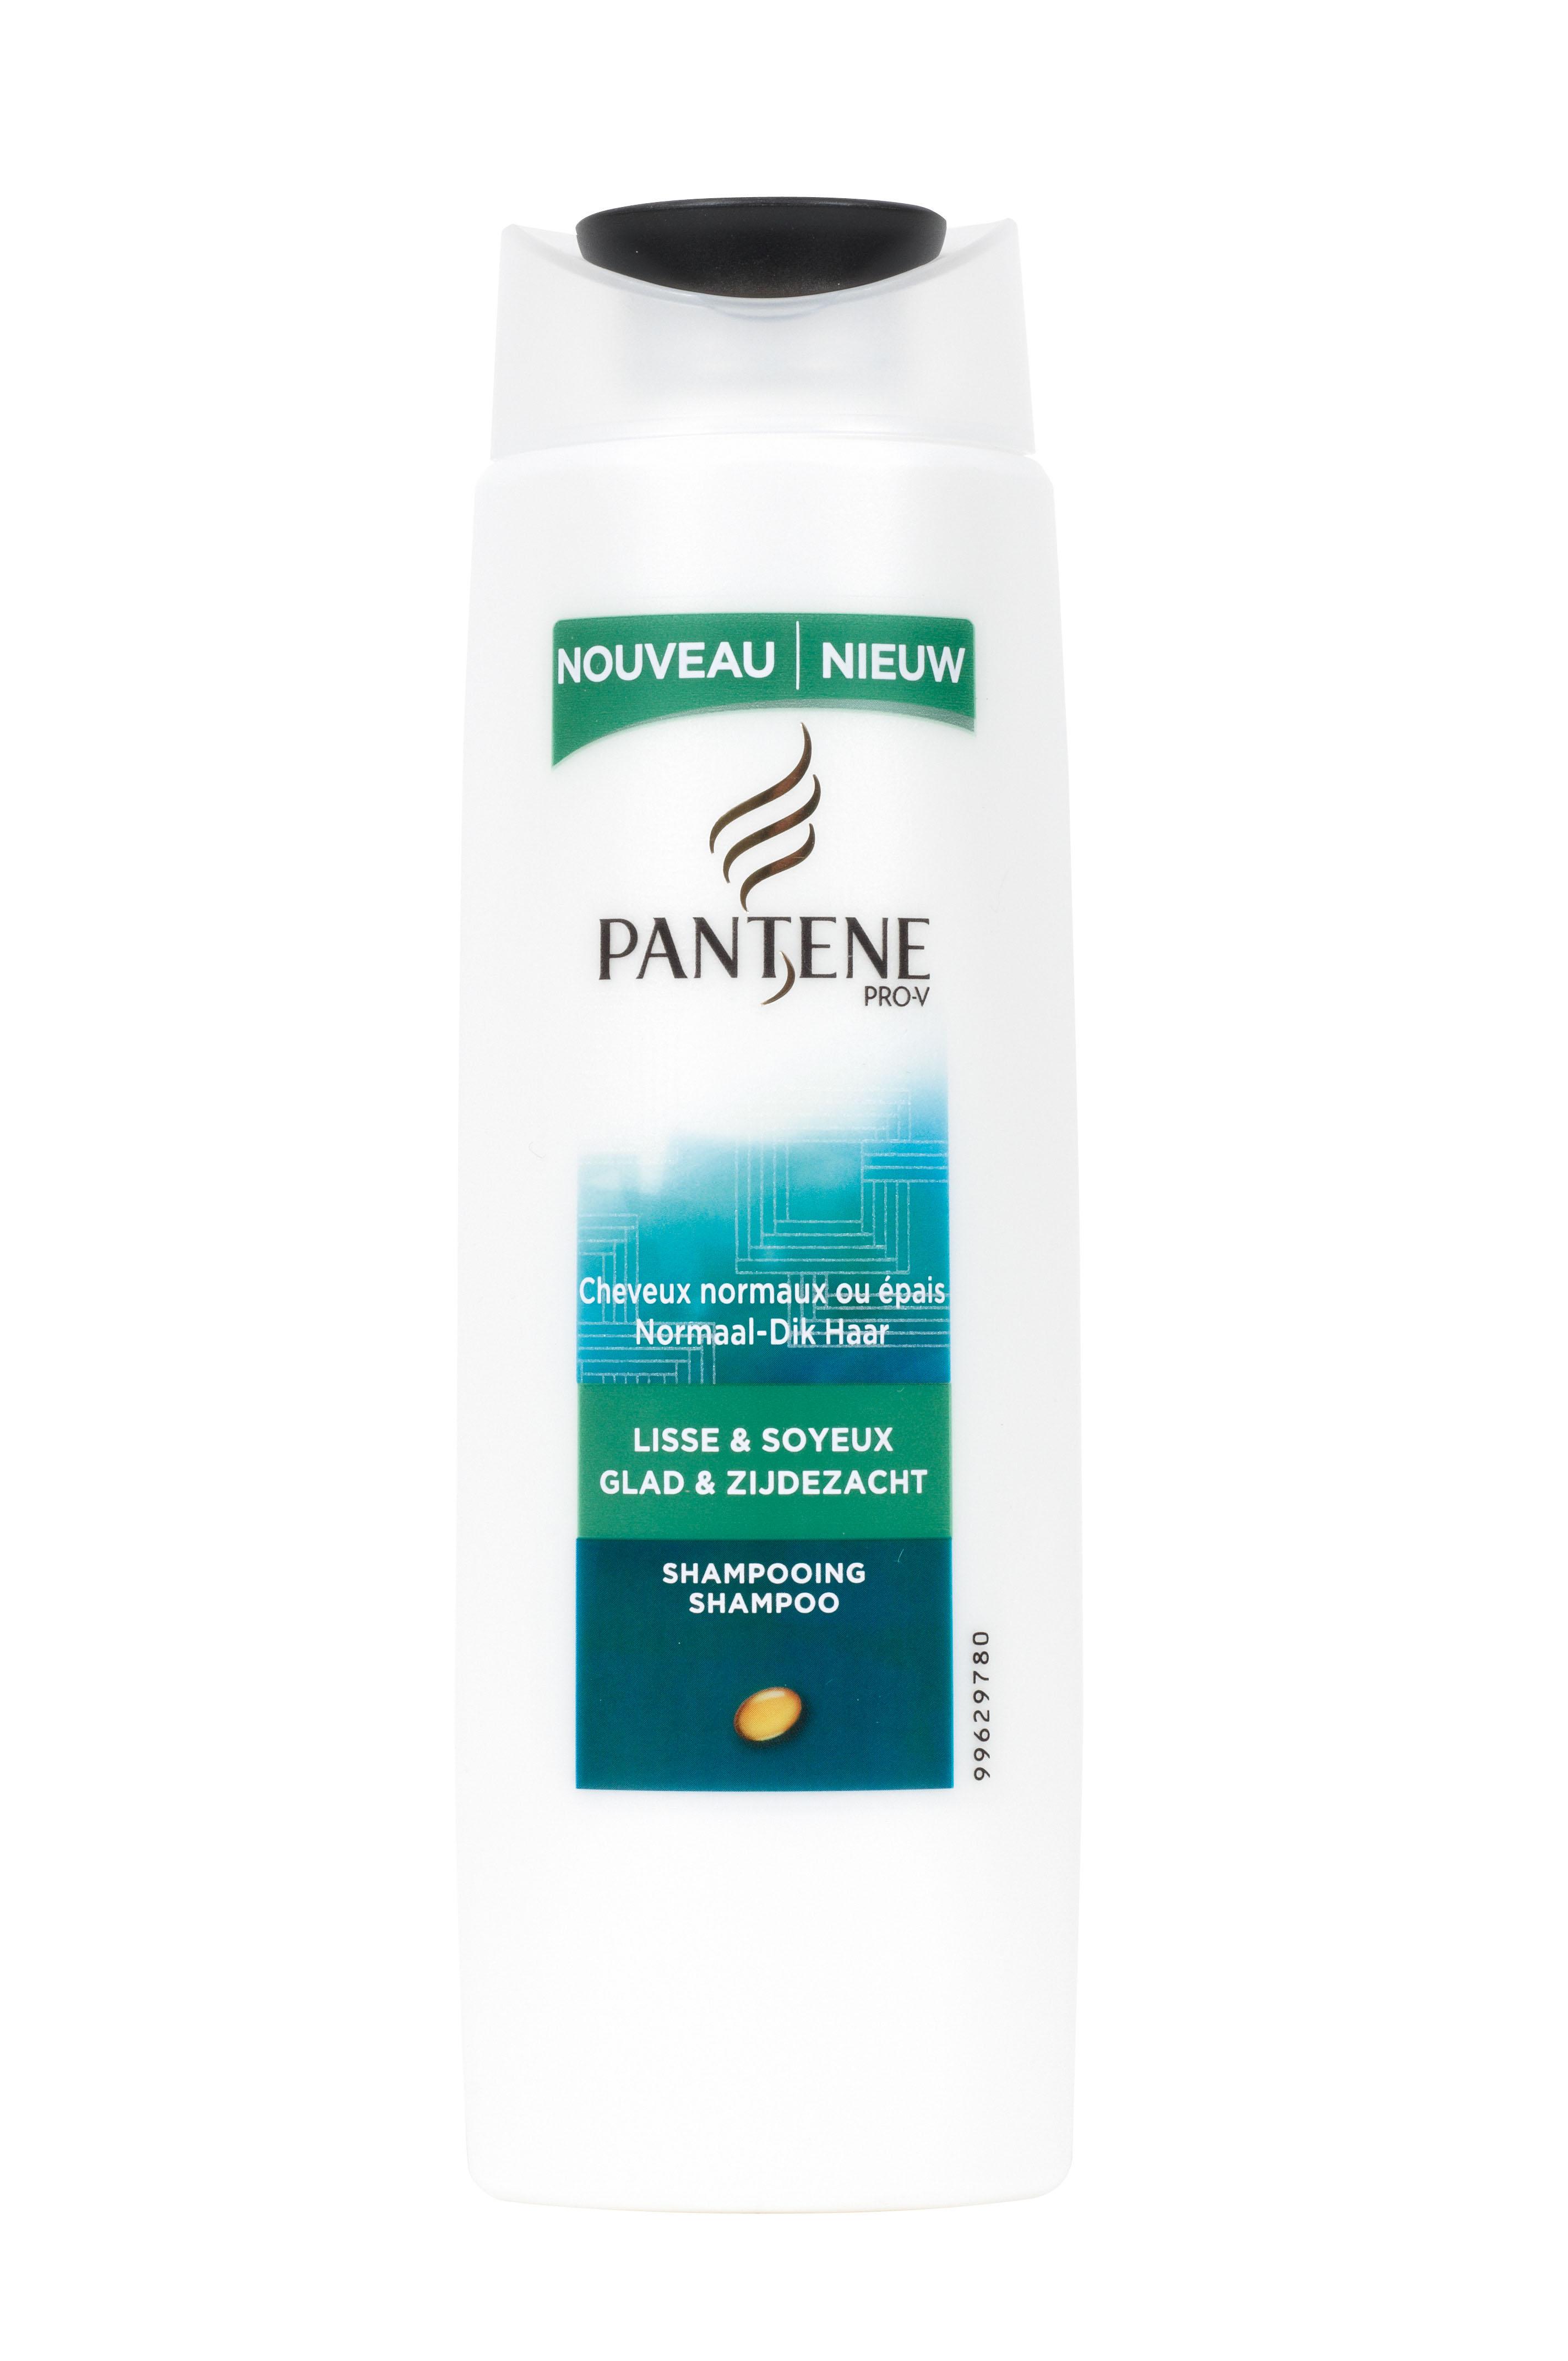 Pantène shampoo - €3.89